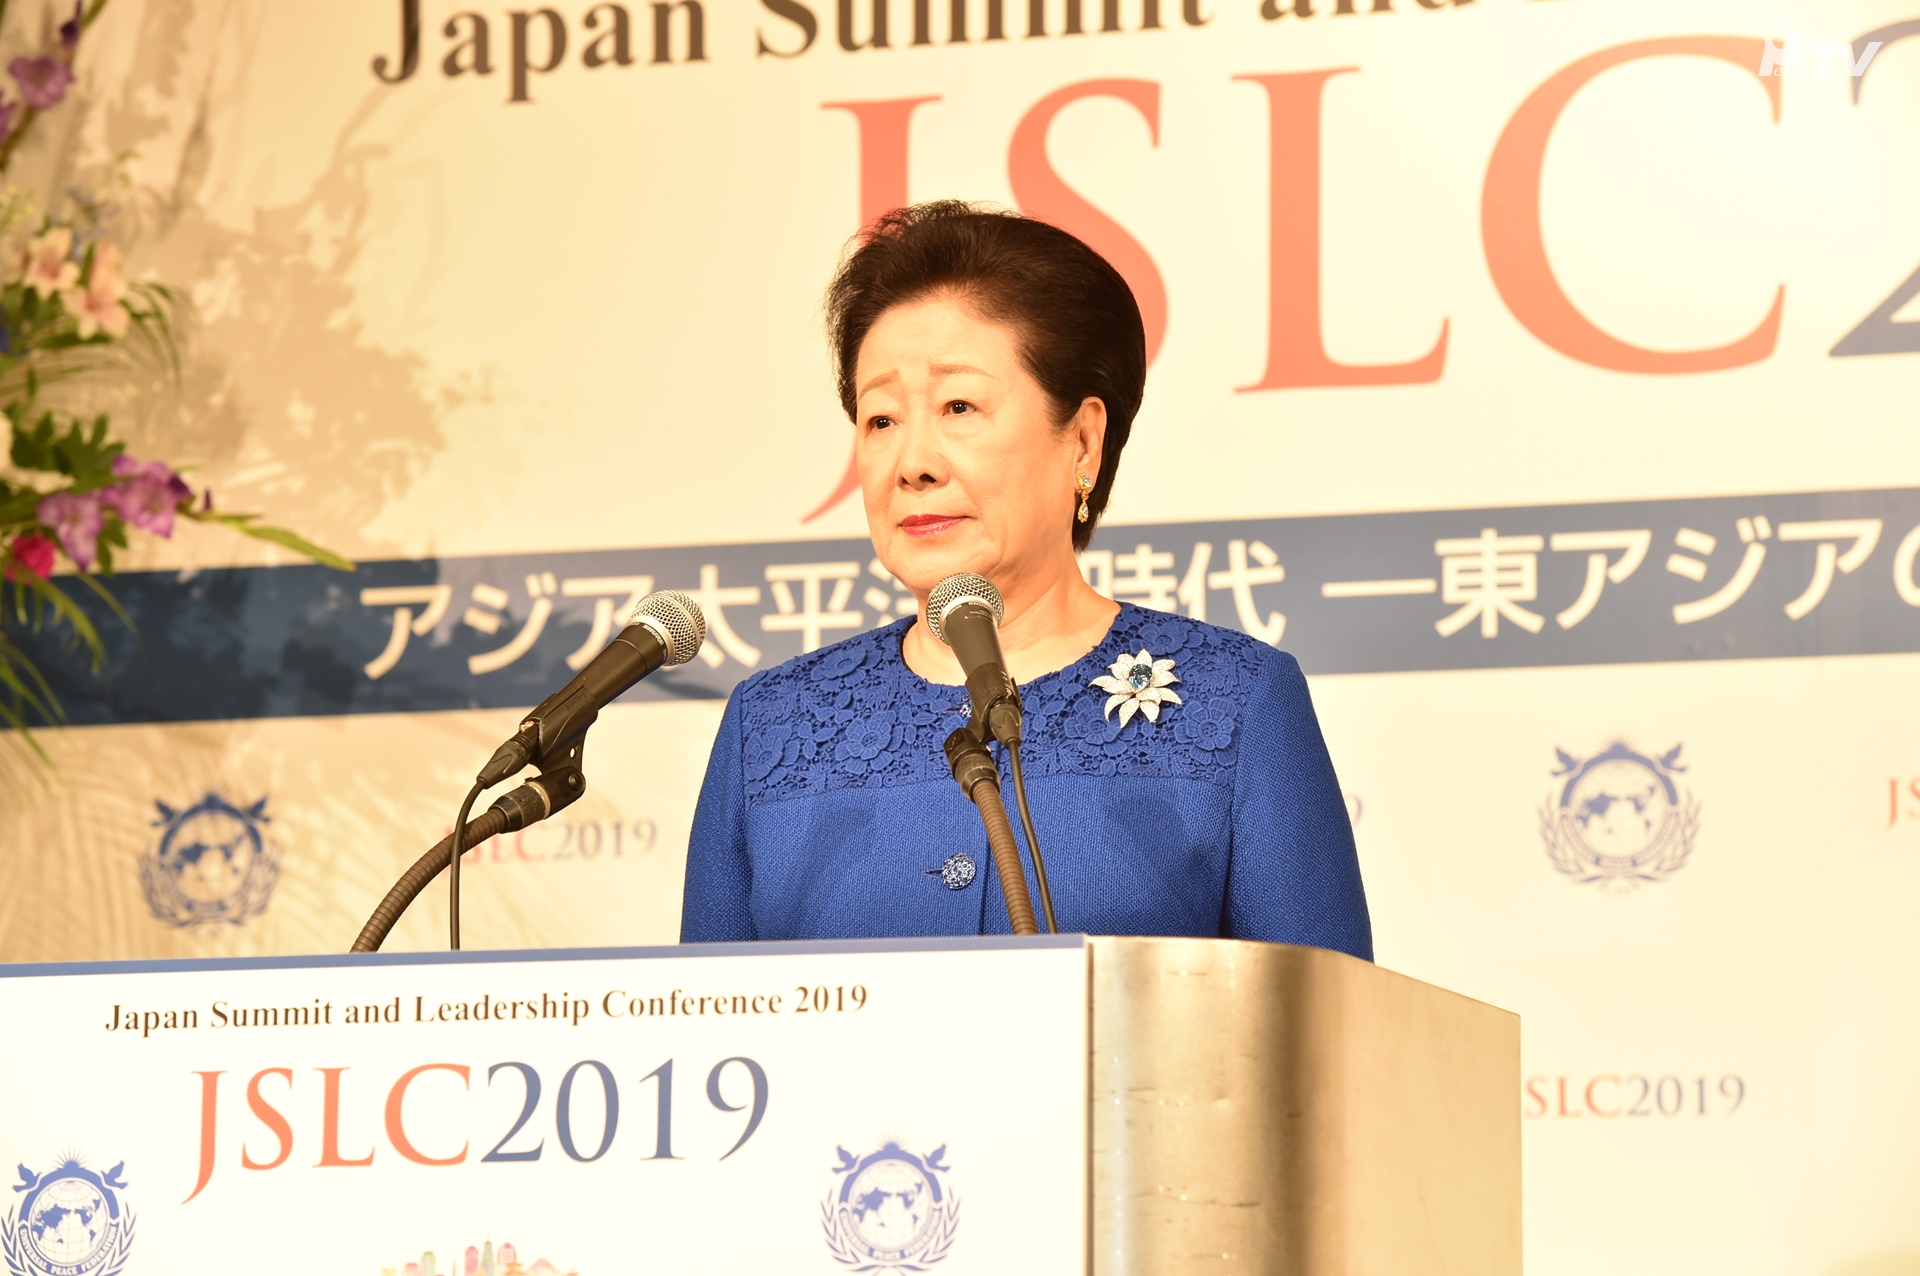 Japan Summit and Leadership Conference 2019 (October 5, Hotel Nagoya Castle, Japan)